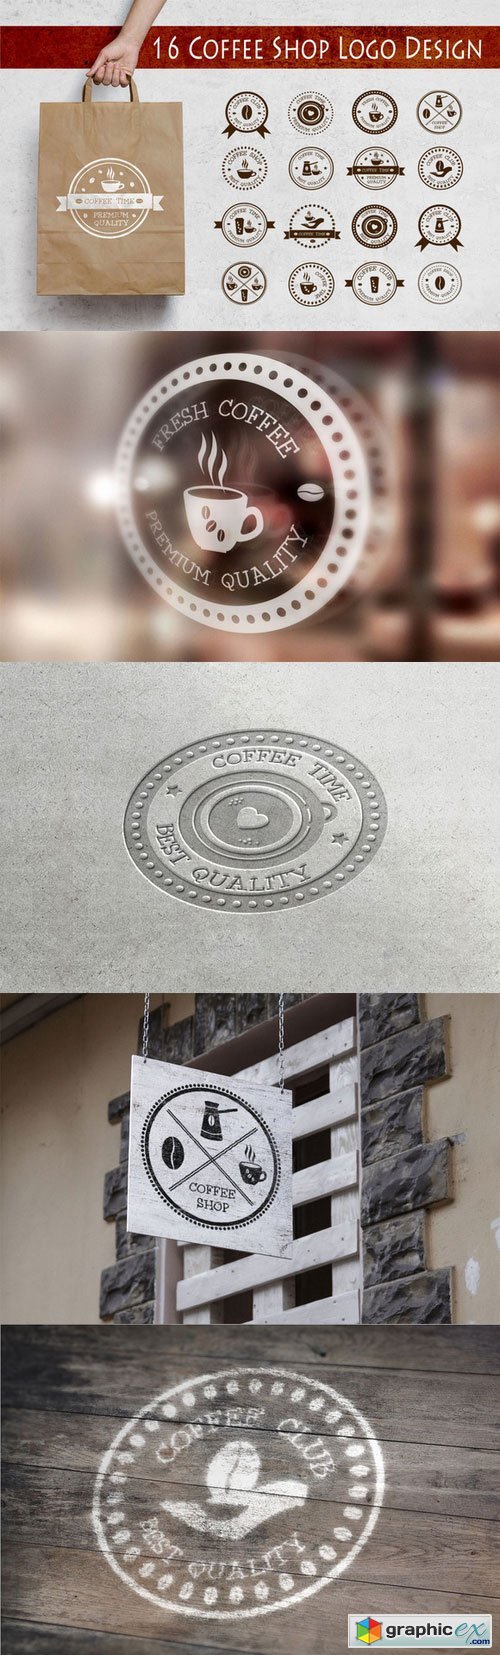 16 Coffee Shop Logo Design